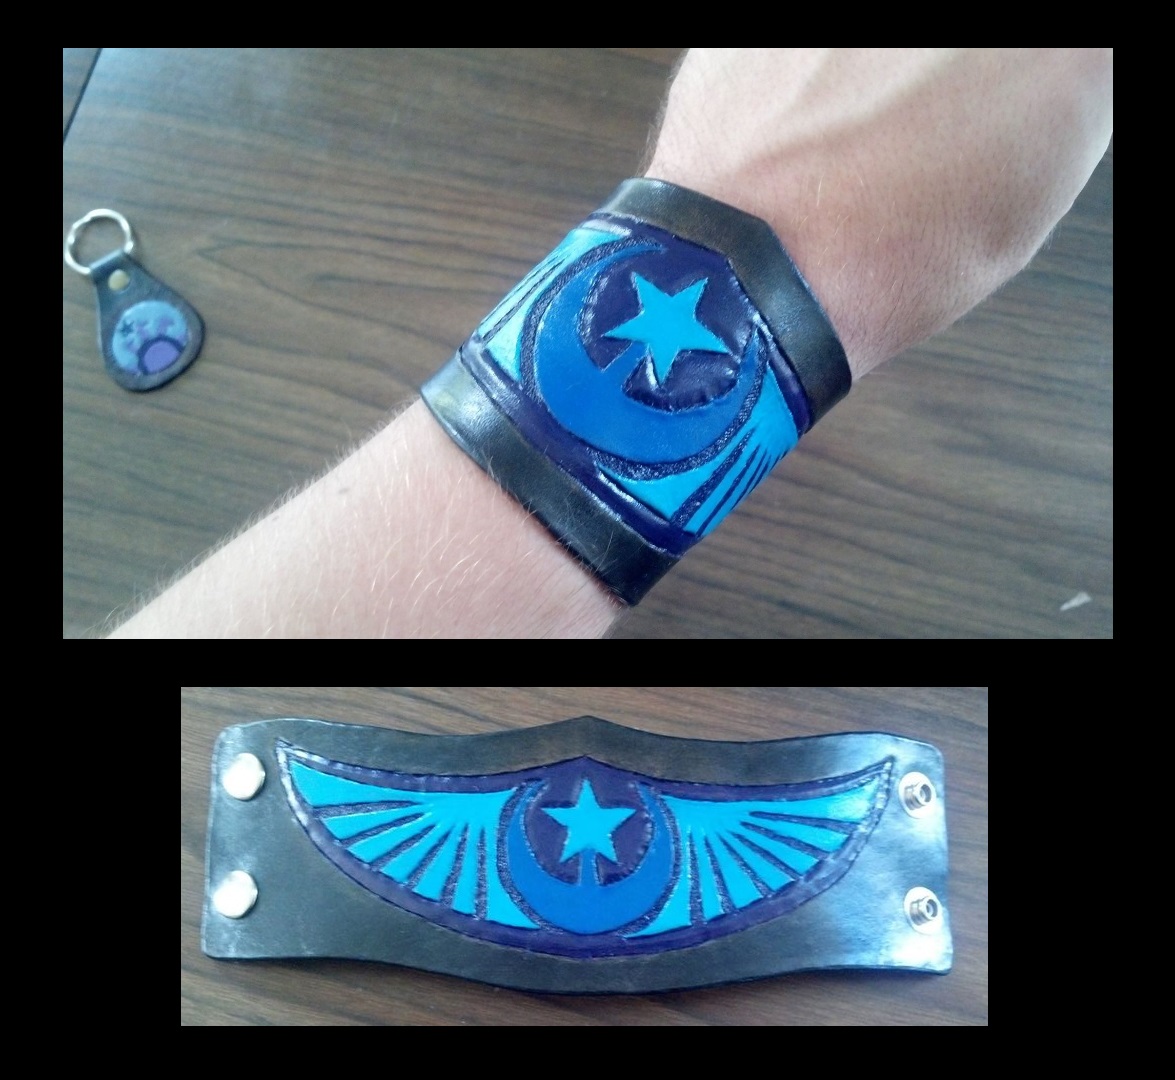 New Lunar Republic leather bracelet